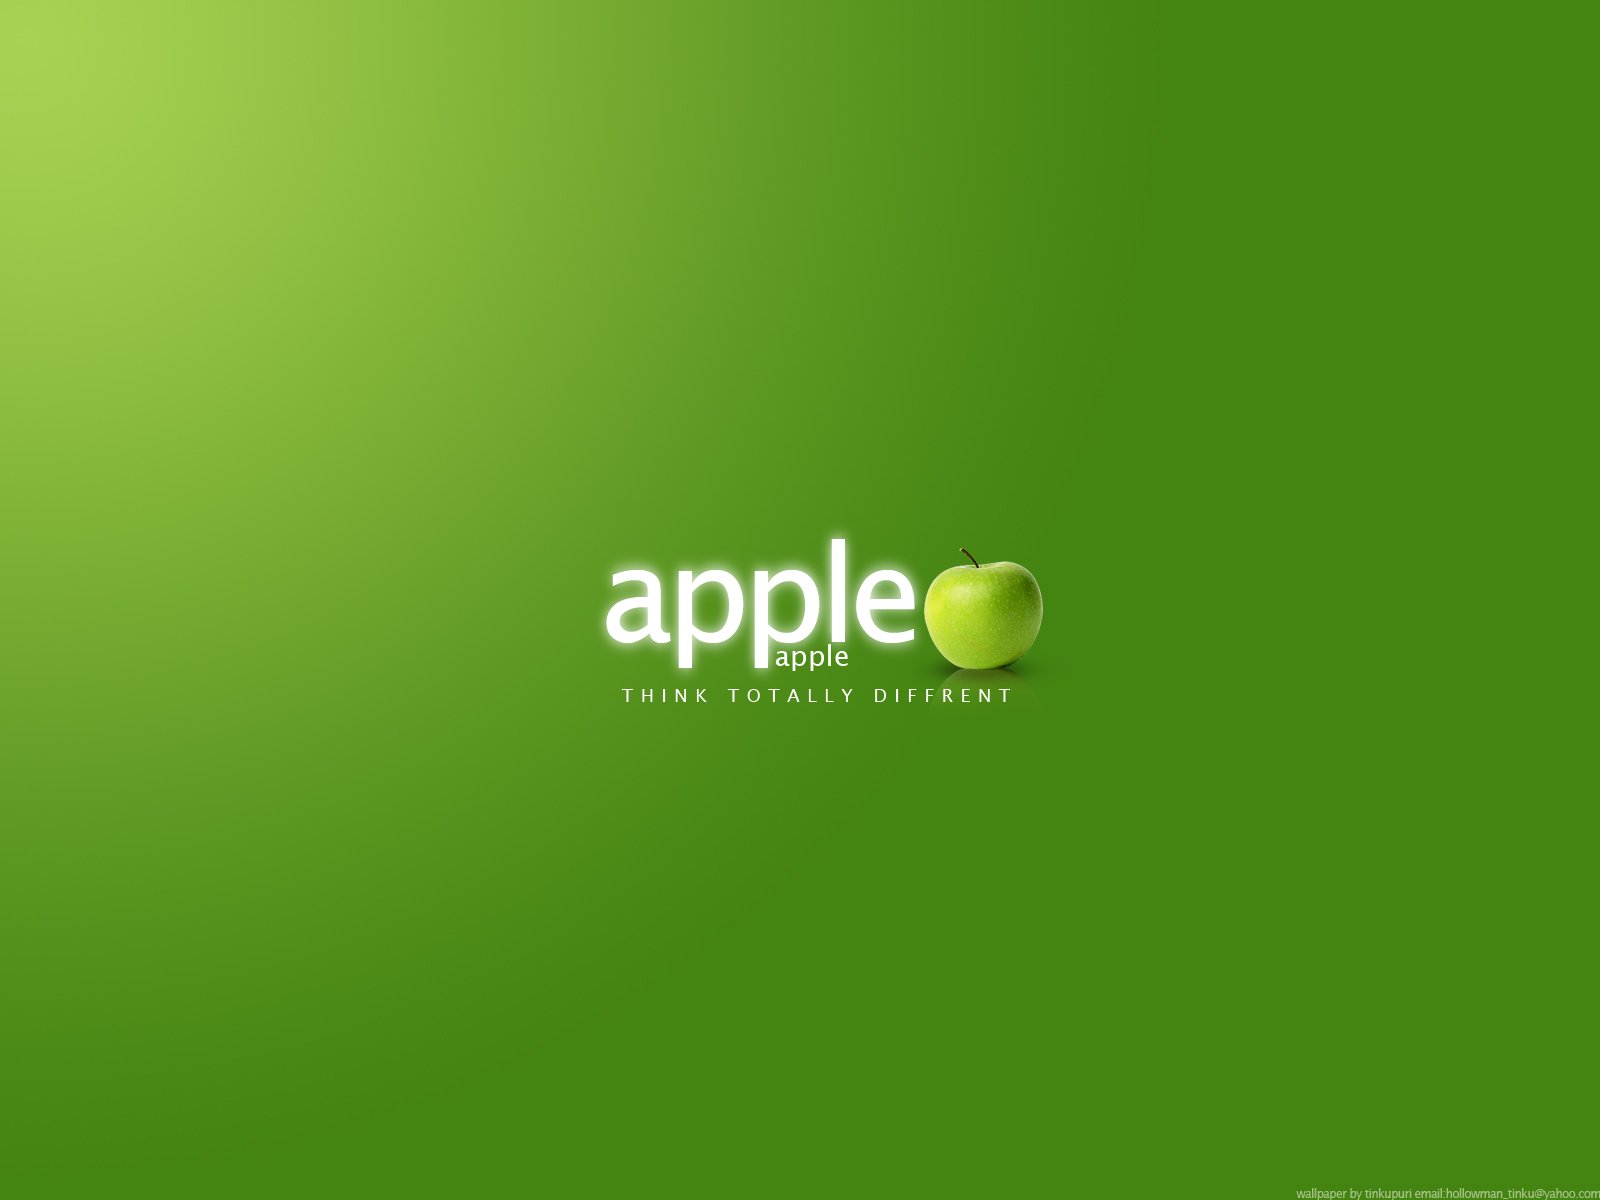 Wallpaper green background - Apple fans - Green Wallpapers ...